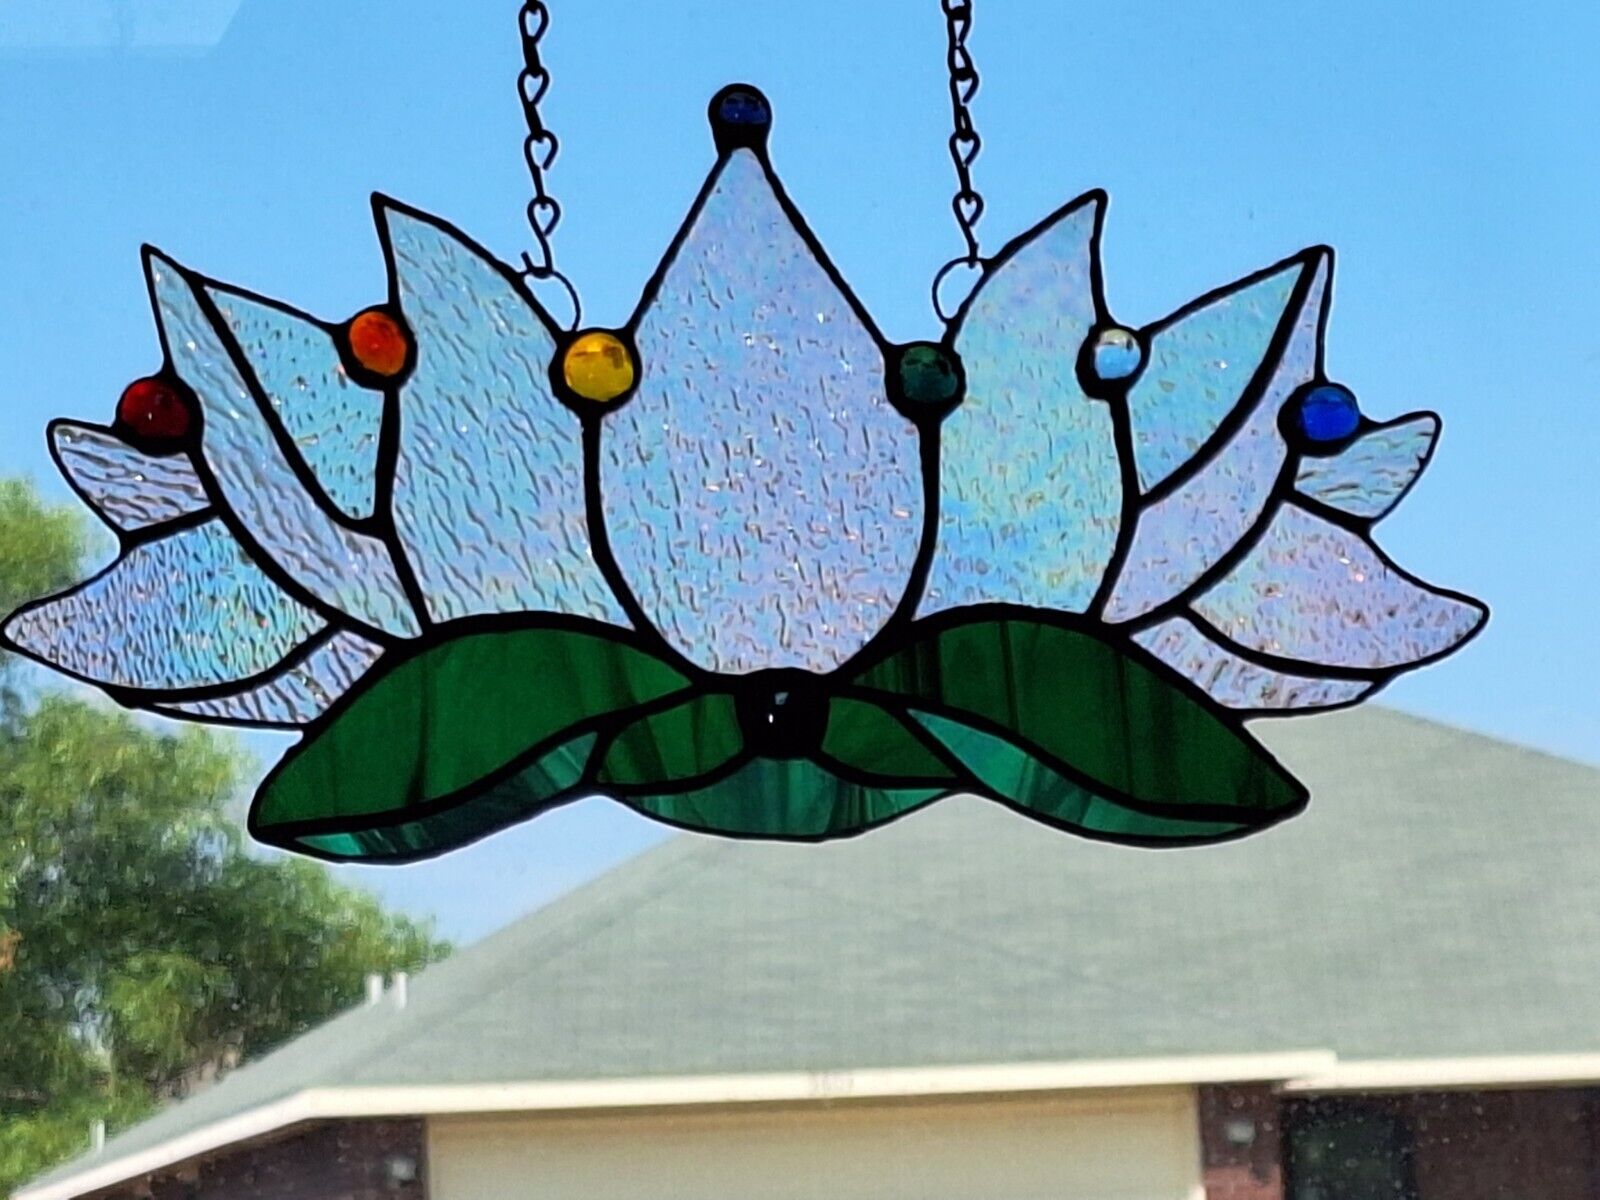 Stained glass iradized lotus,glass gems  suncatherlarge 15.25x7.75-40x19cm